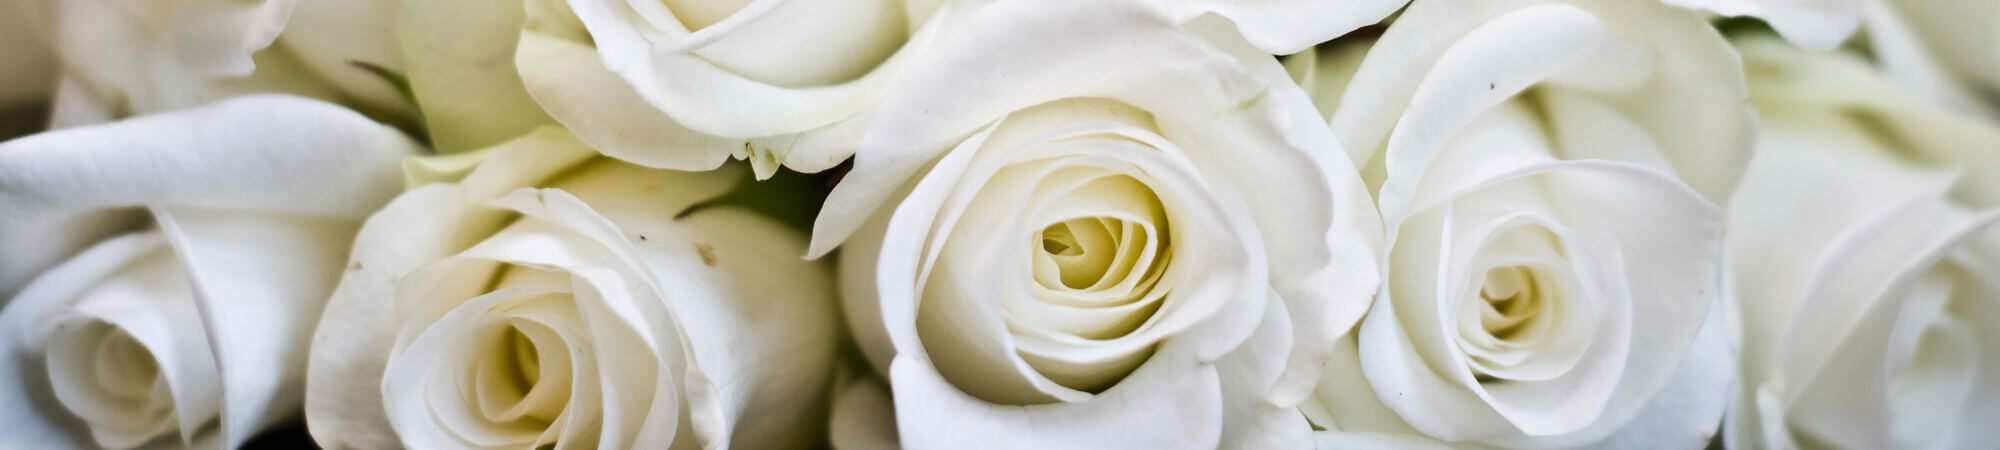 white rose flowers background